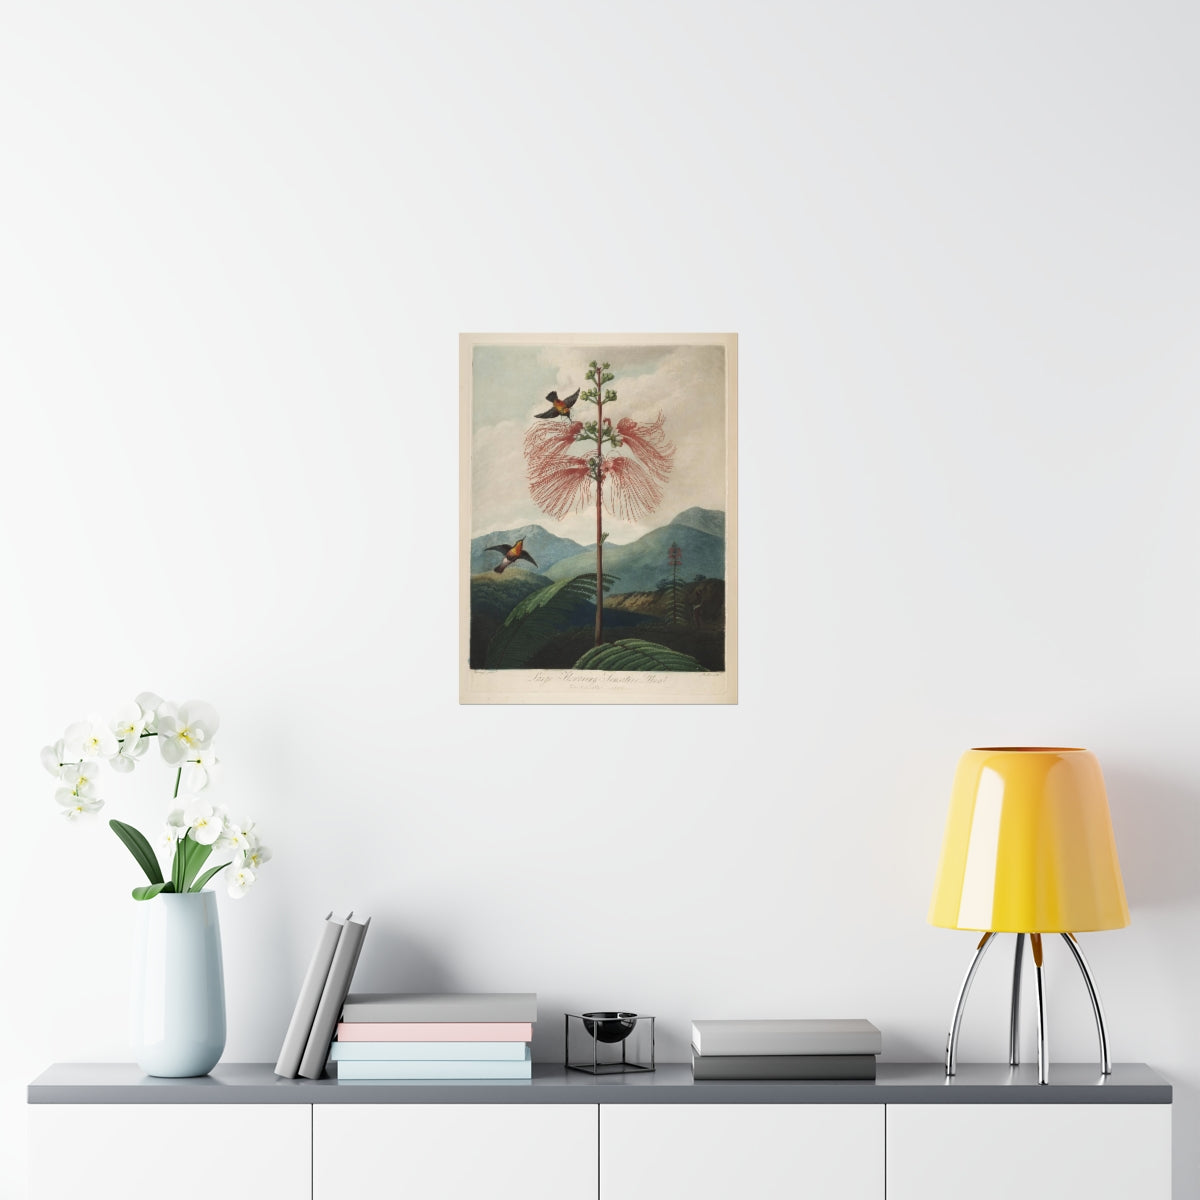 Temple Of Flora - Large Flowering Sensitive Plant Print Poster